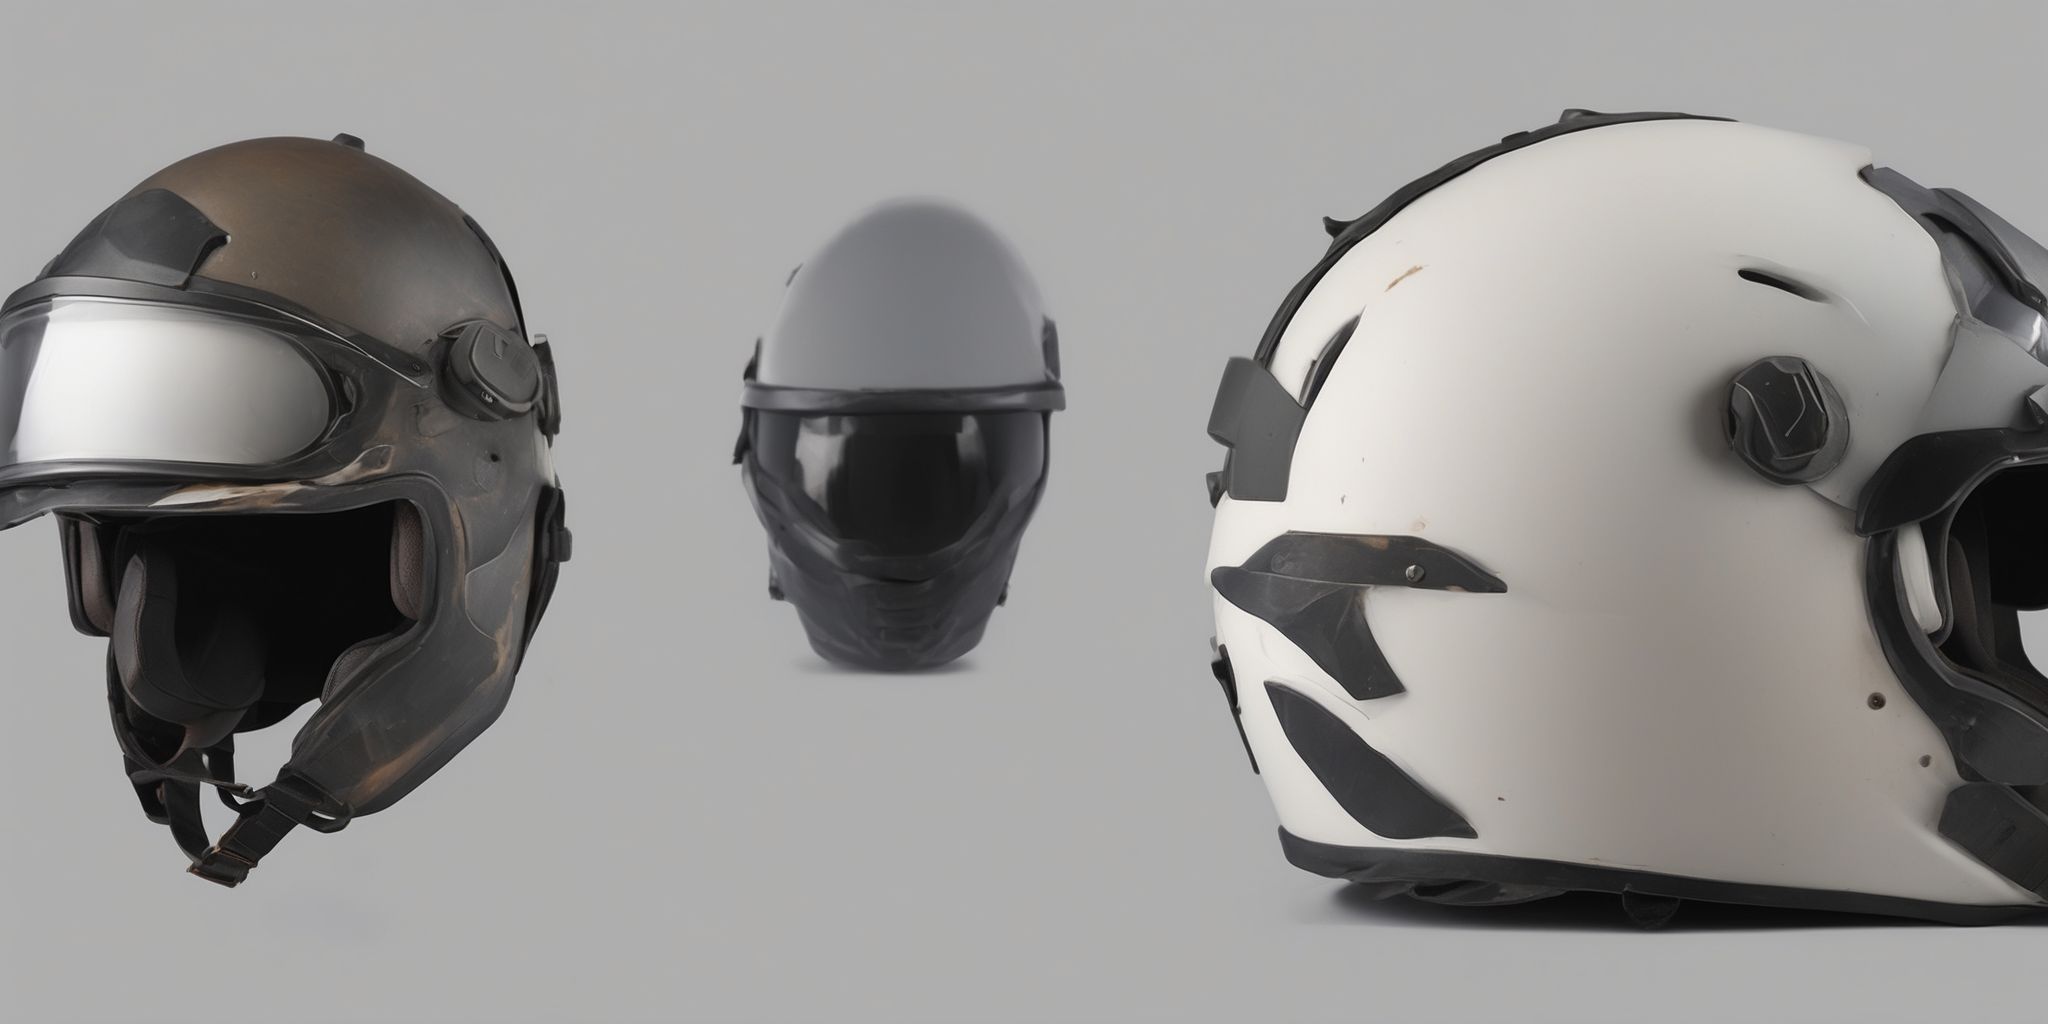 Helmet  in realistic, photographic style